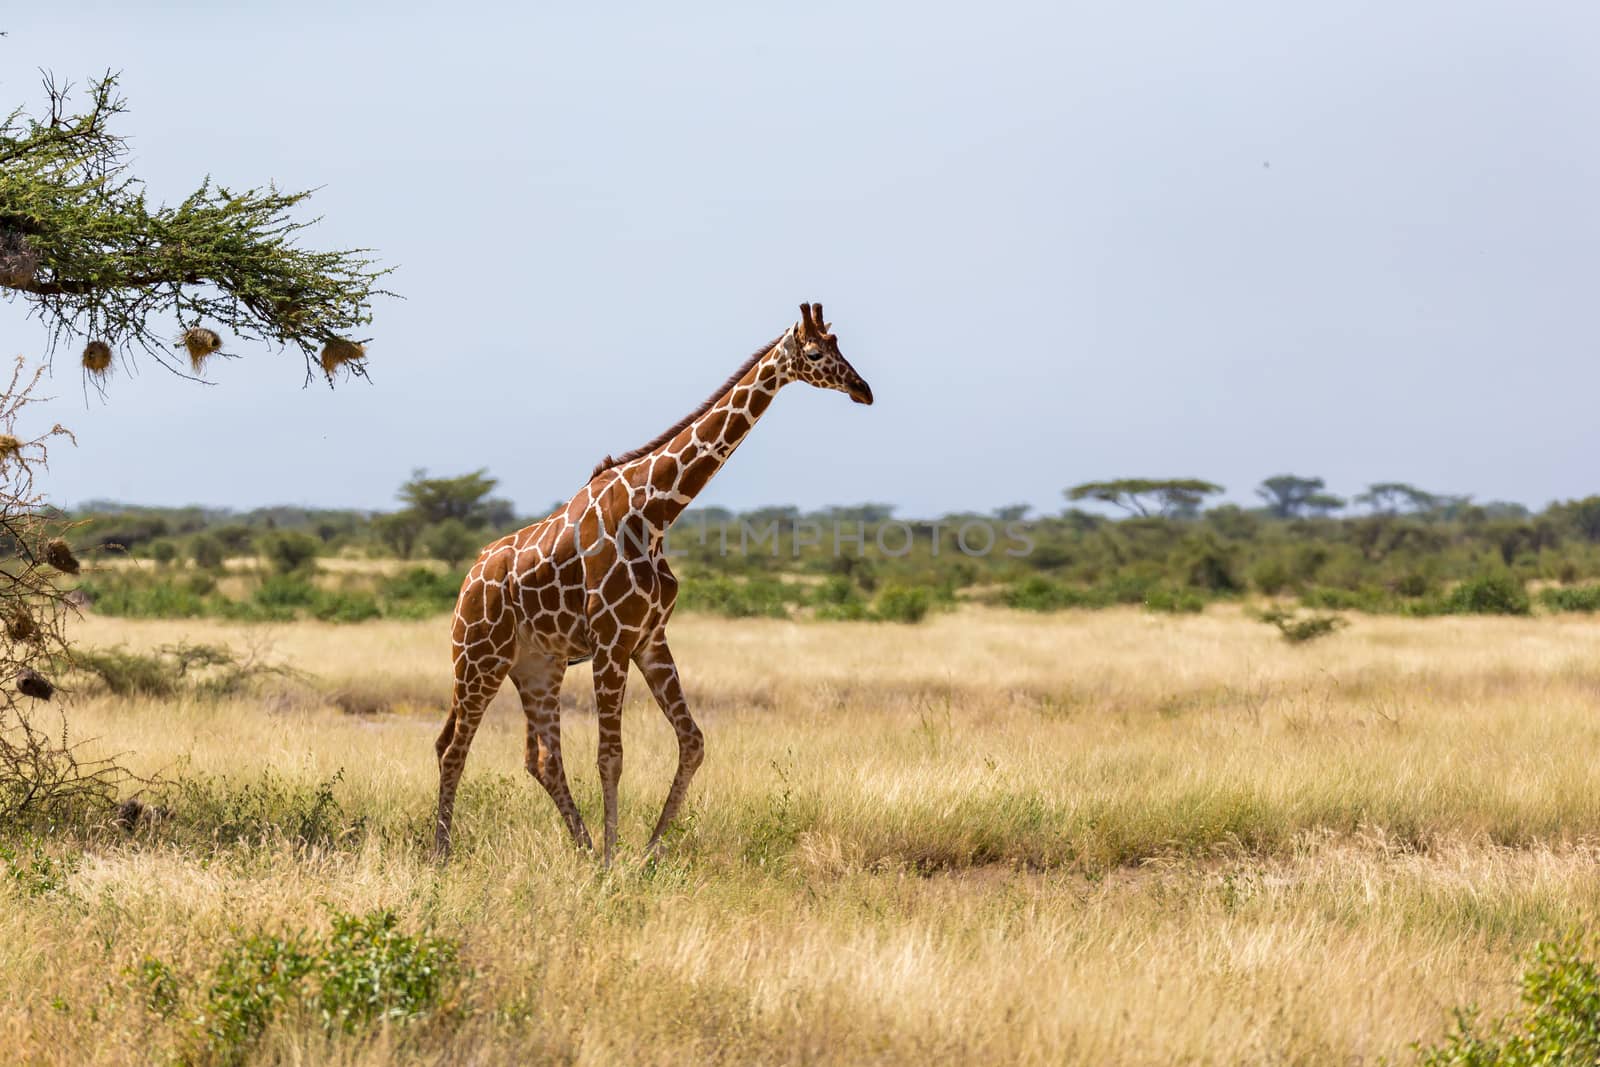 One giraffe walk through the savannah between the plants